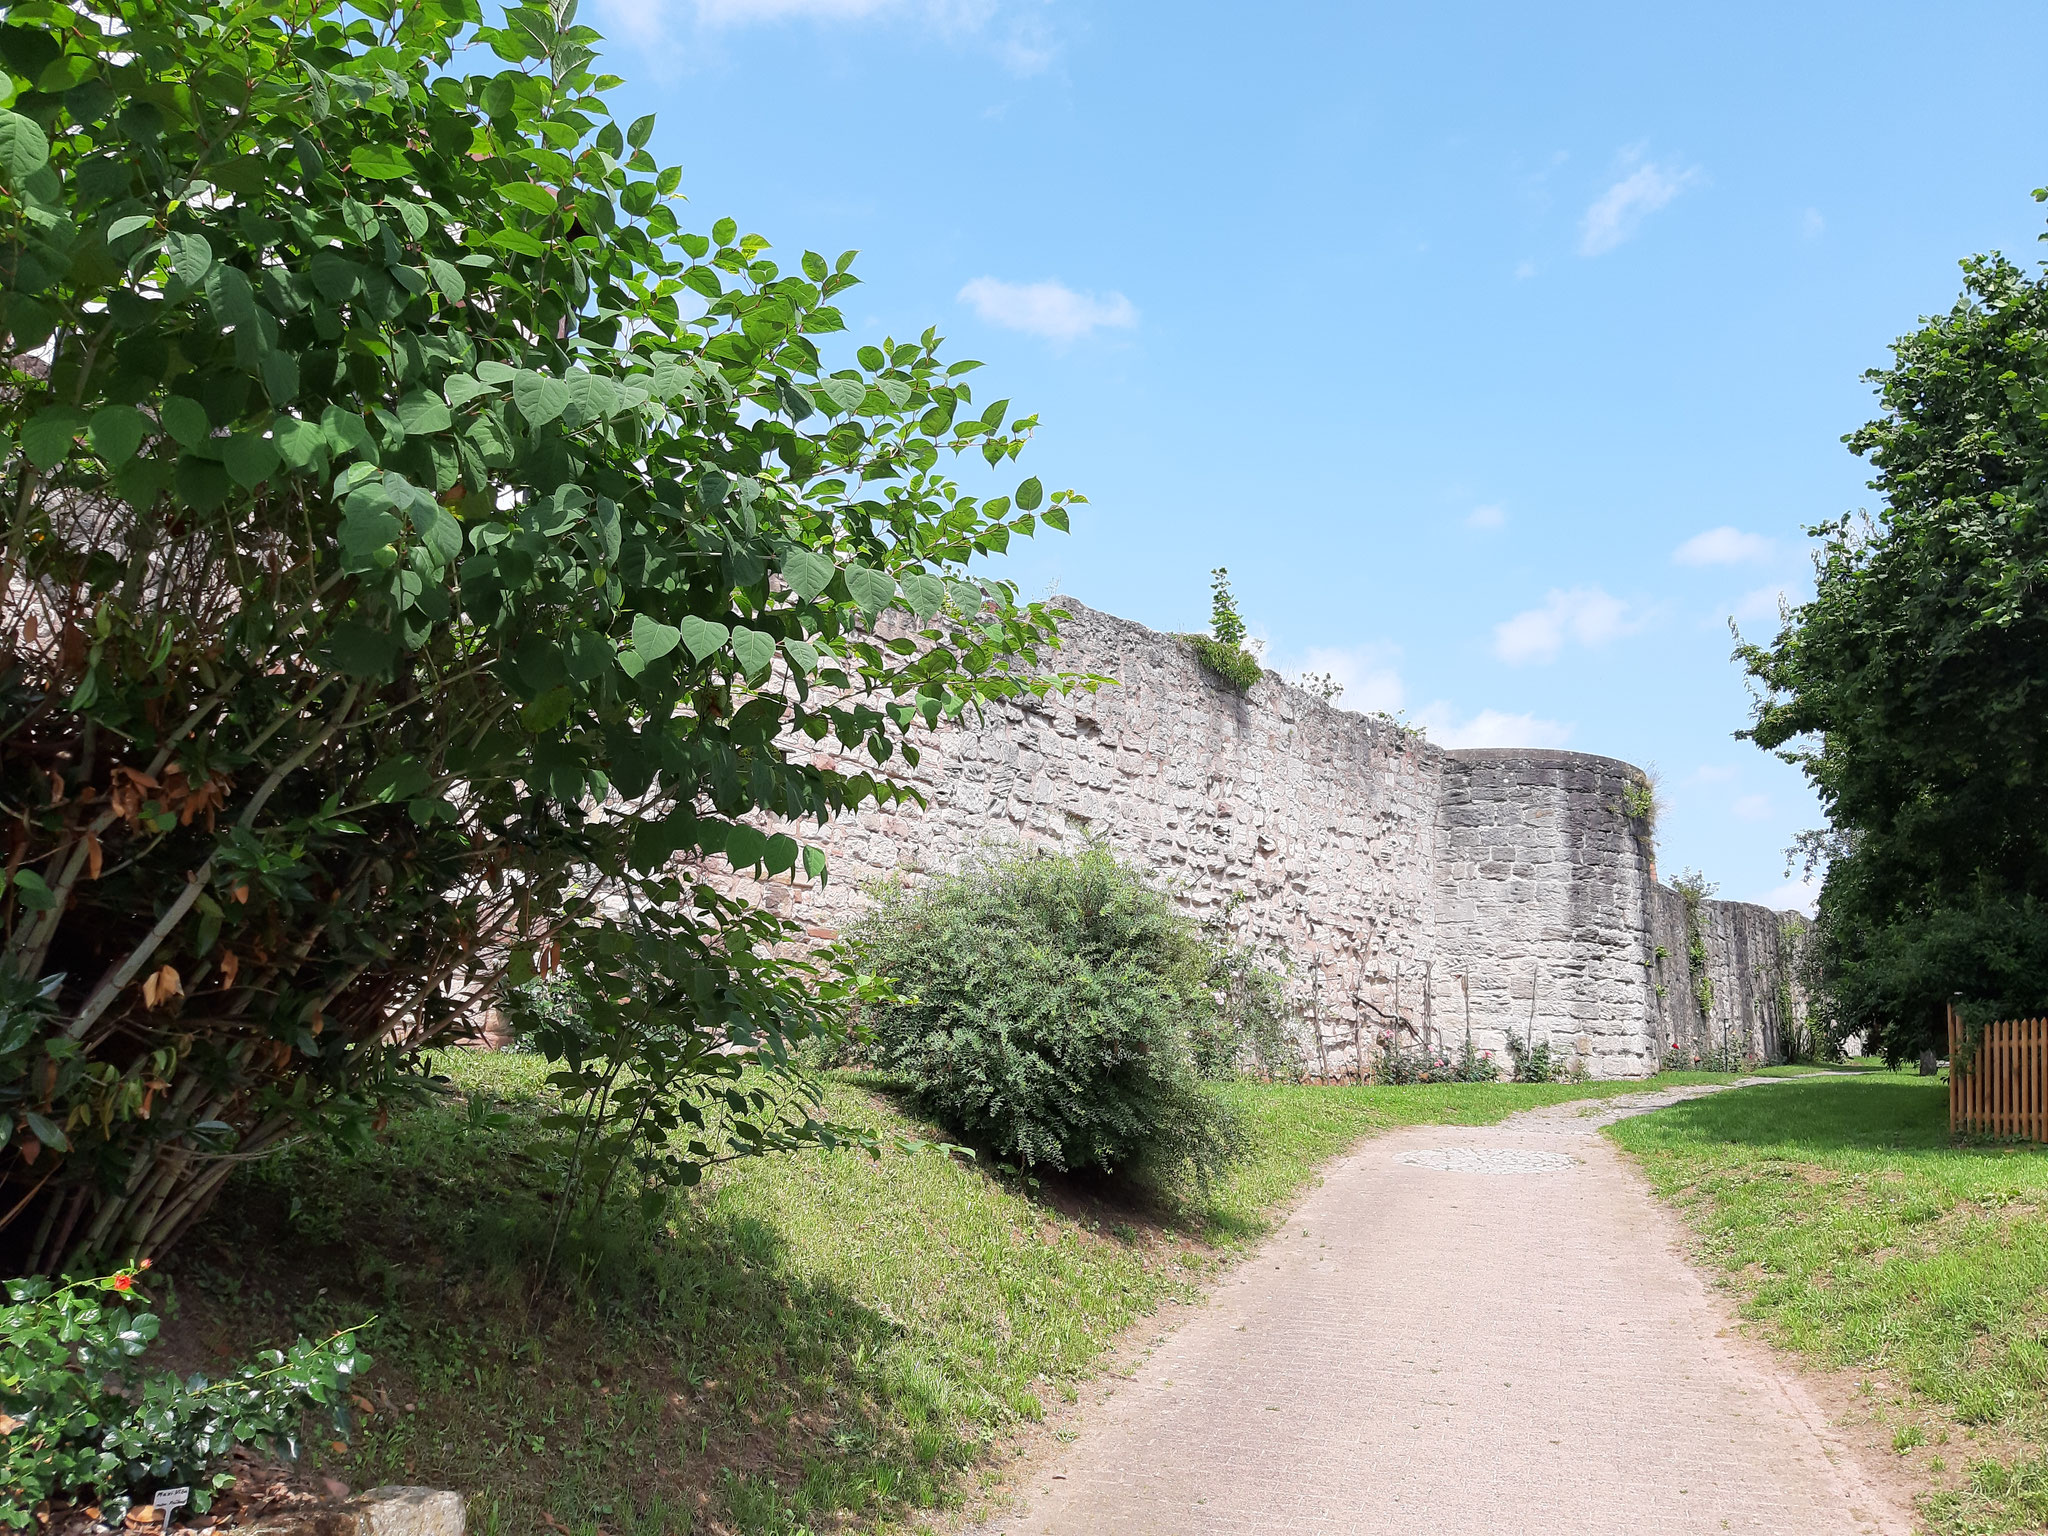 Die alte Stadtmauer in Bad Sooden-Allendorf